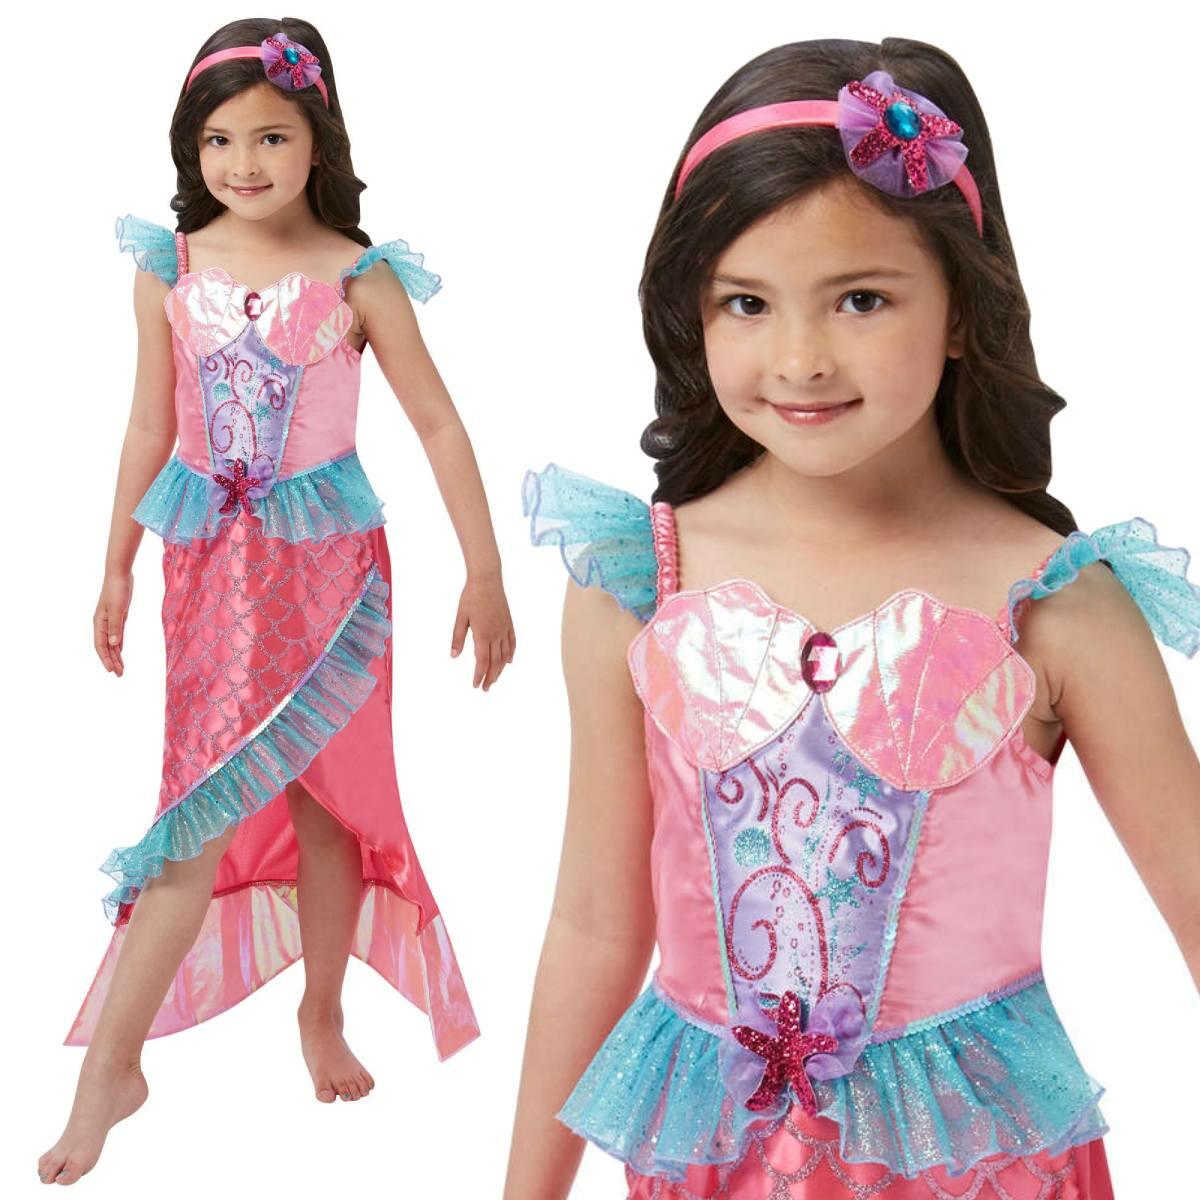 Deluxe Mermaid Princess Fancy Dress Costume For Girls By Rubies 620501 Karnival Costumes 6118